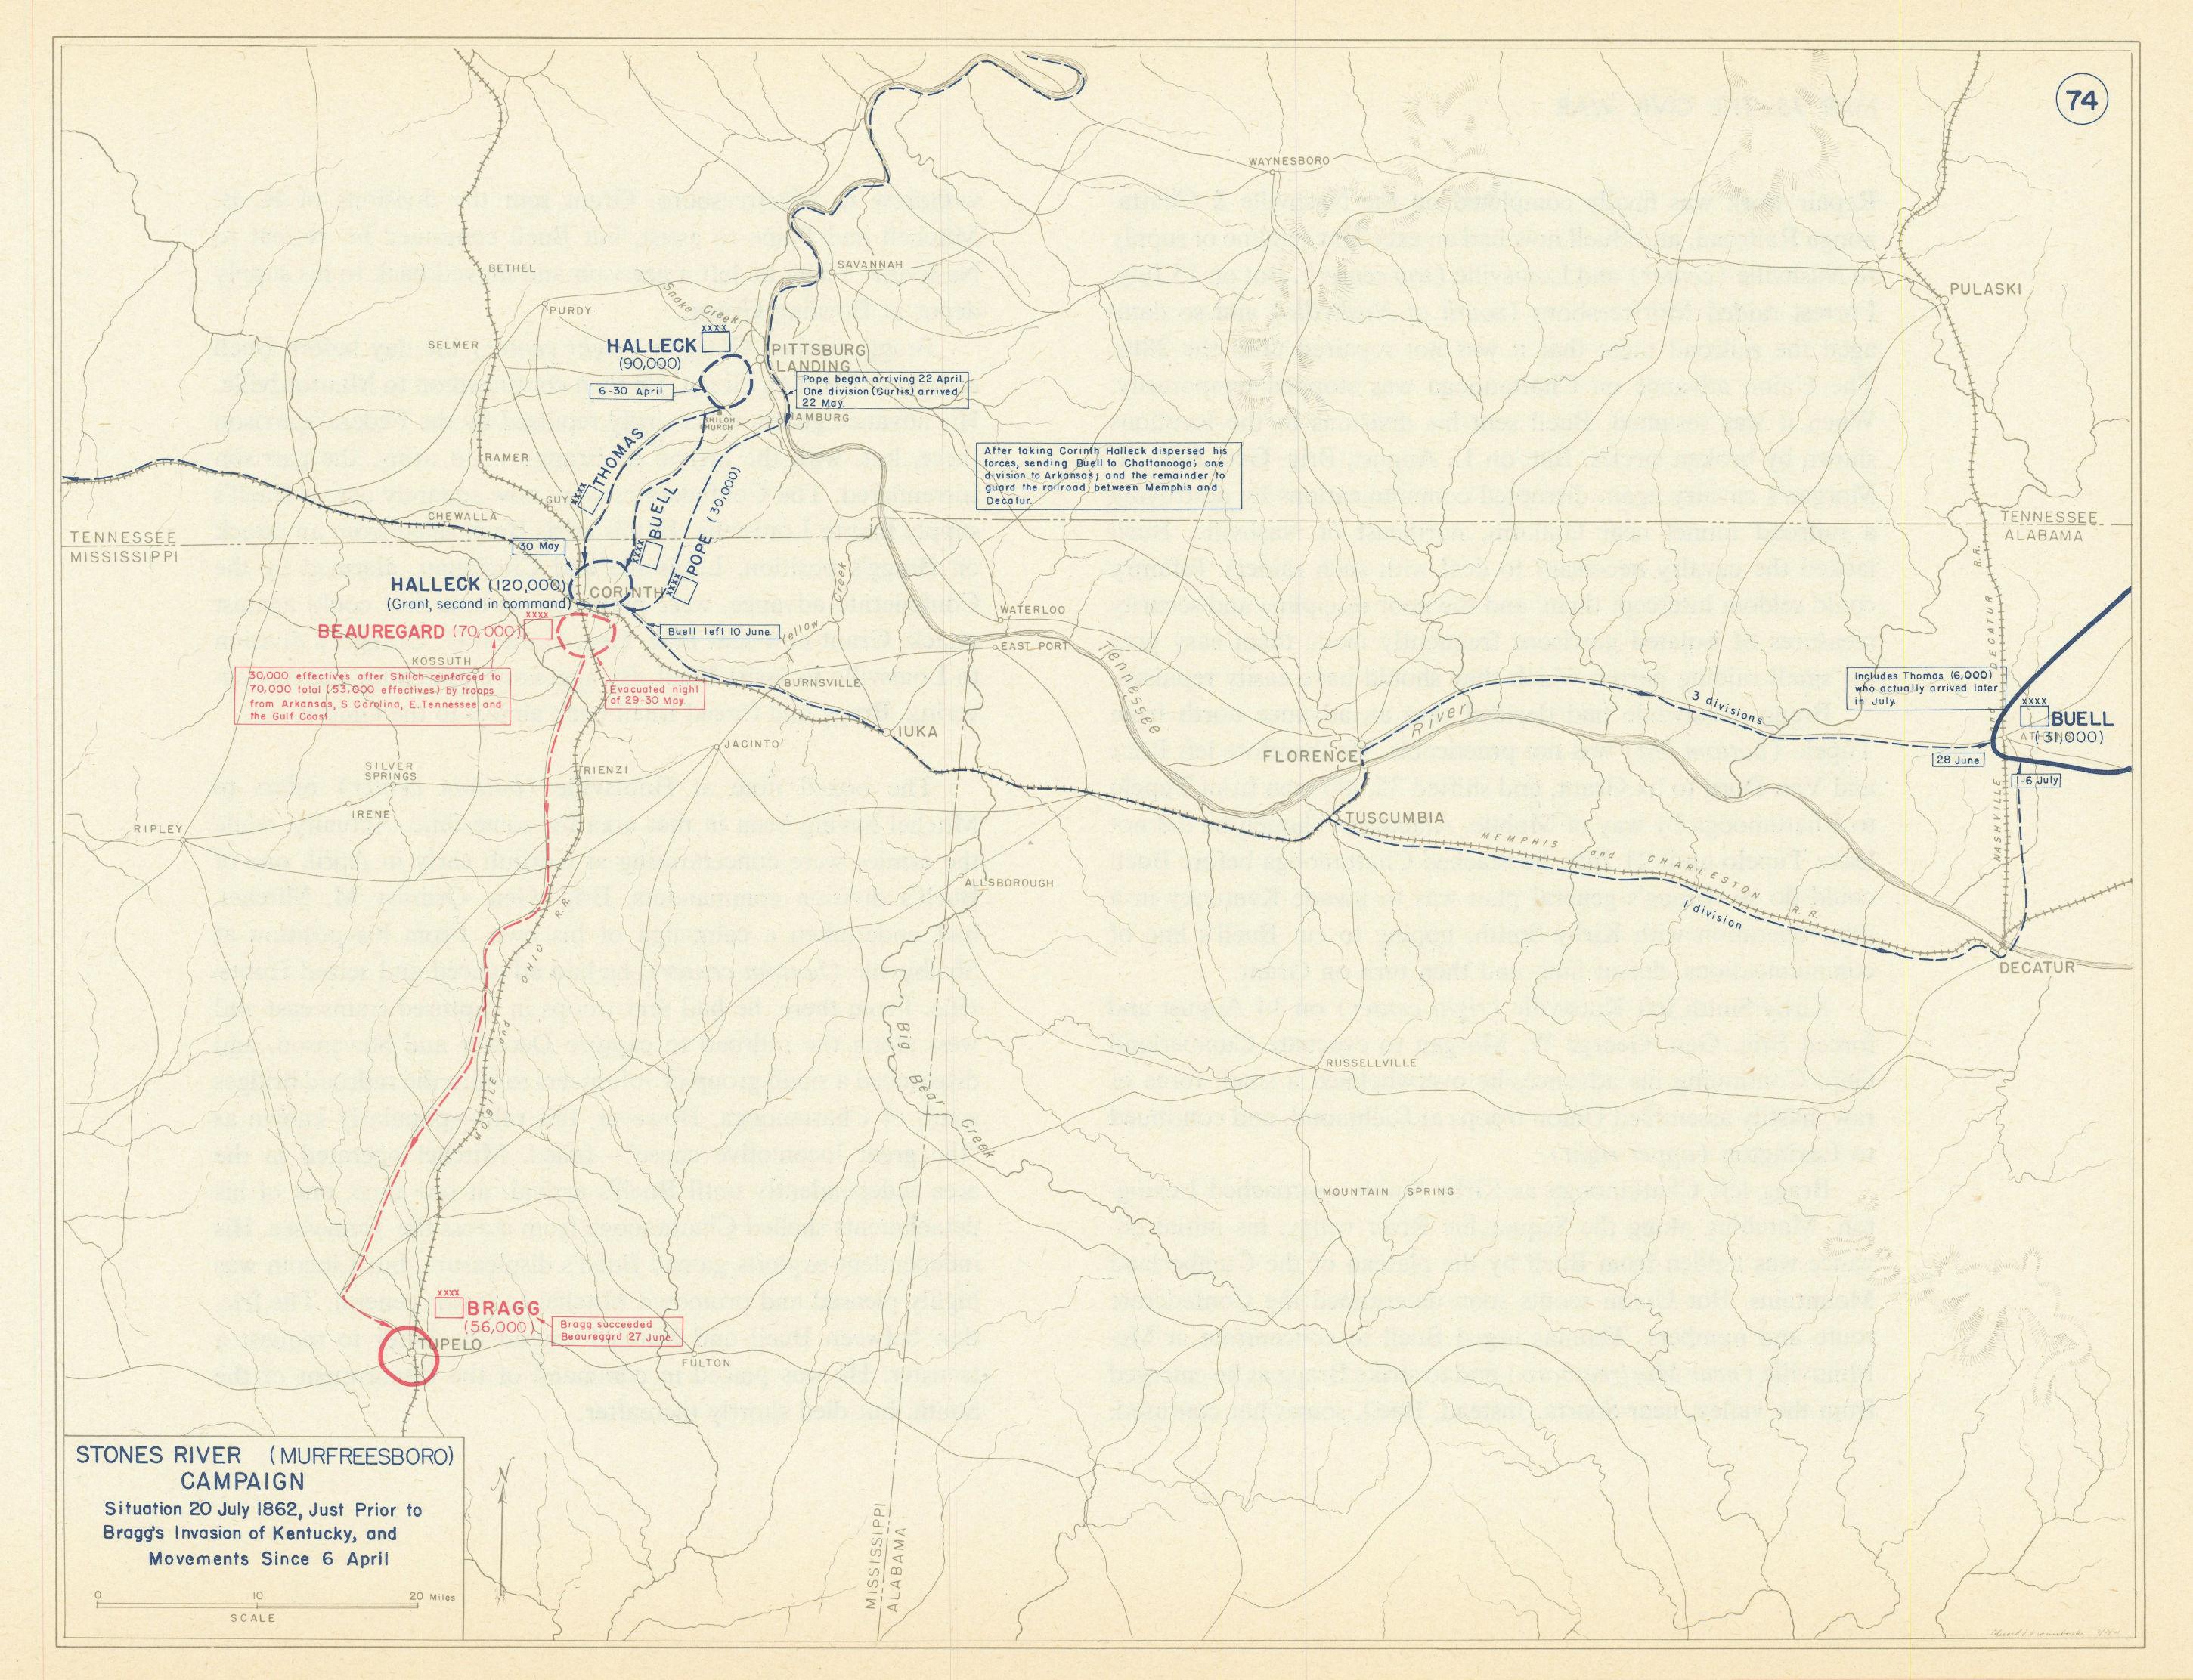 American Civil War. 6 April-20 July 1862 Stones River Campaign 1959 old map